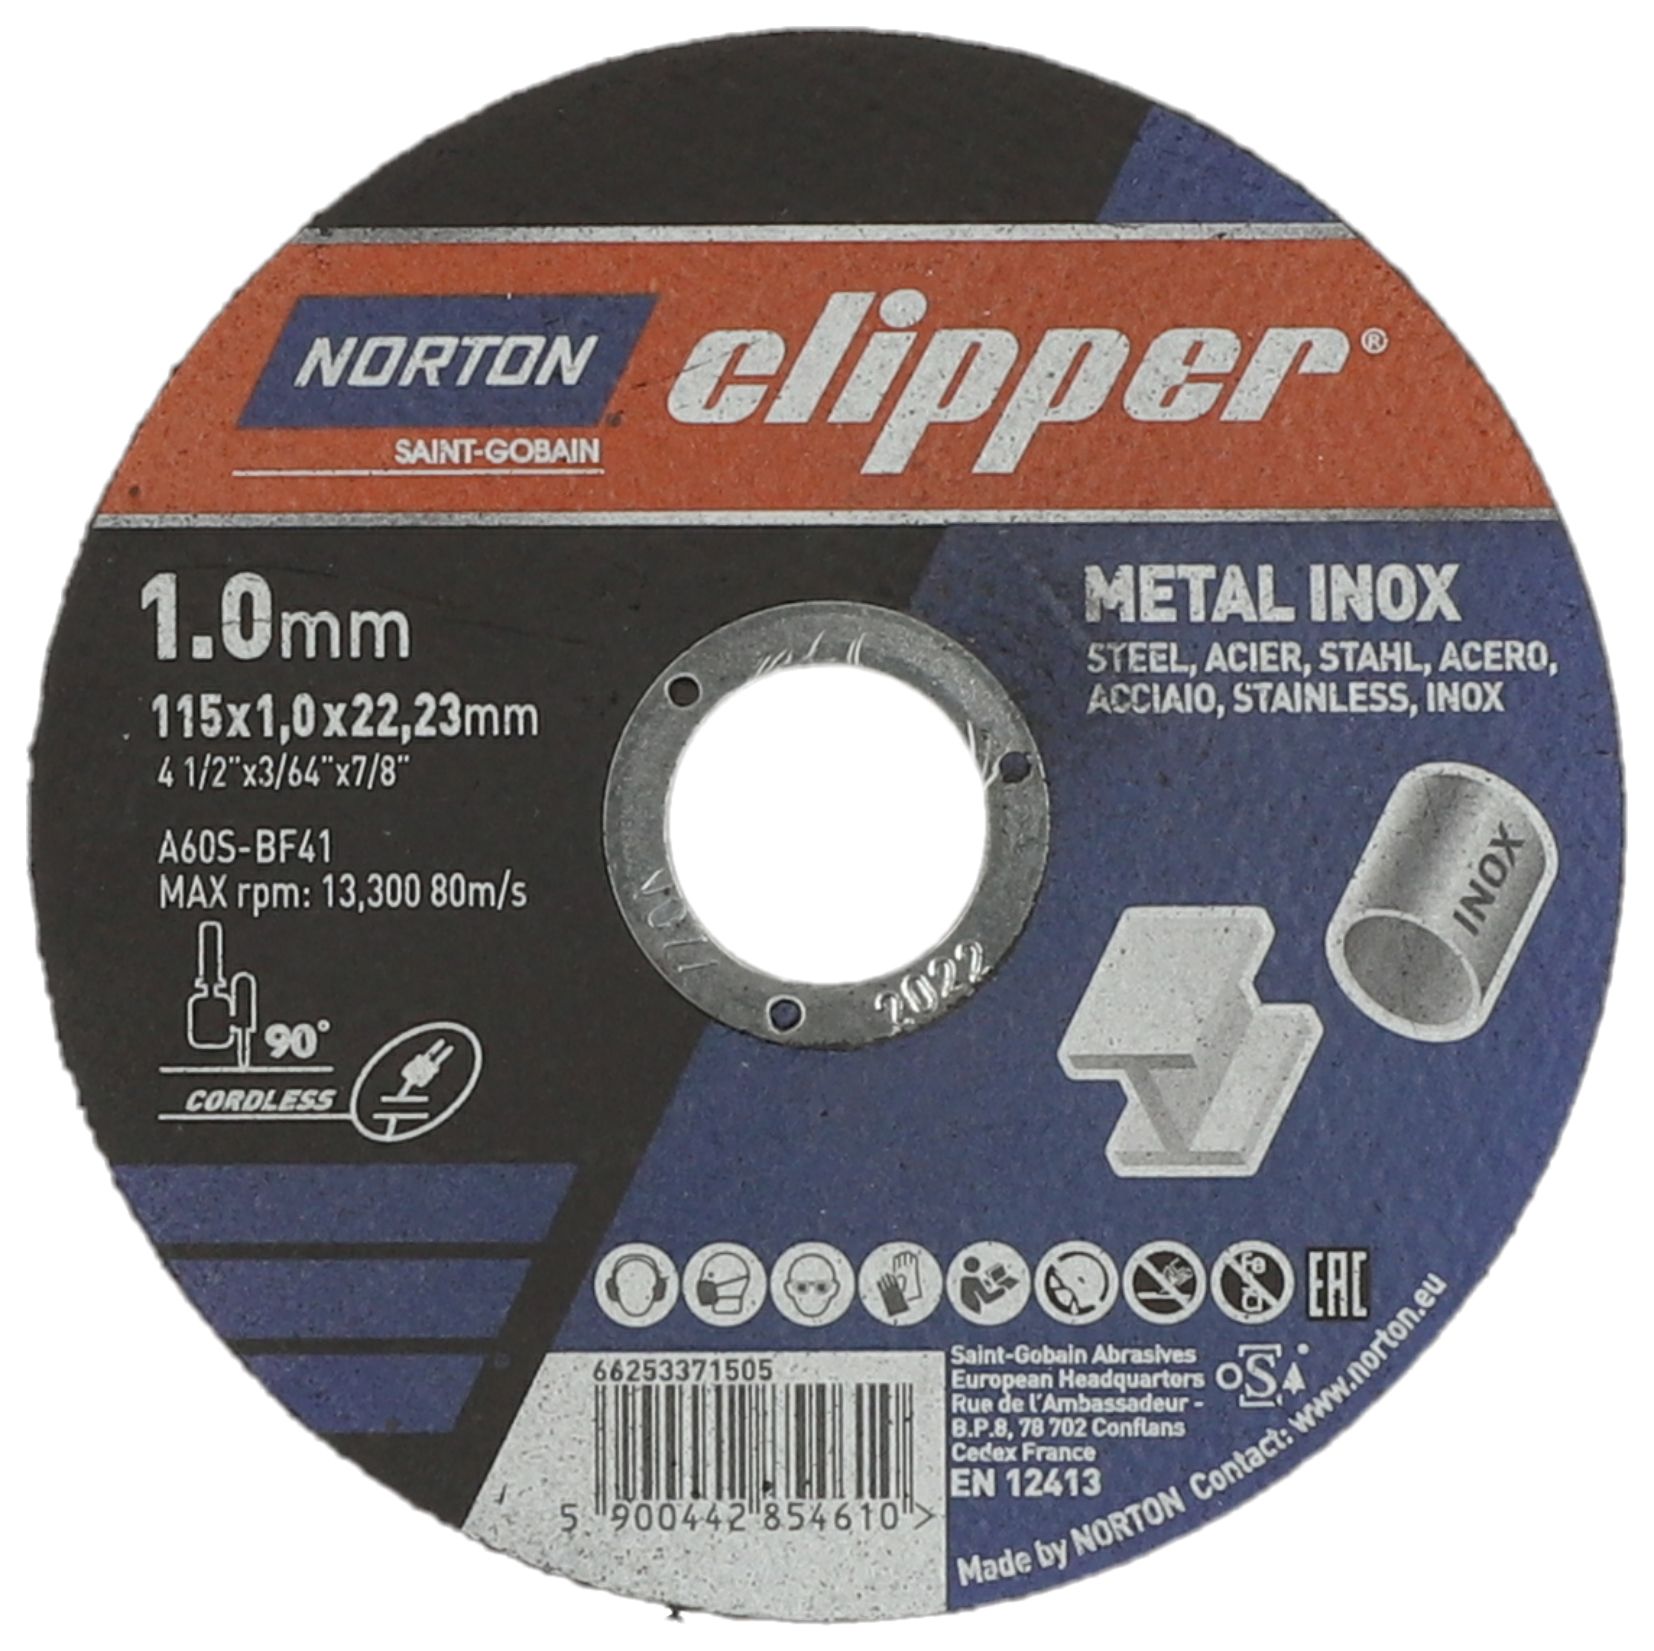 Image of Norton Clipper Metal Inox Cutting Disc - 115mm